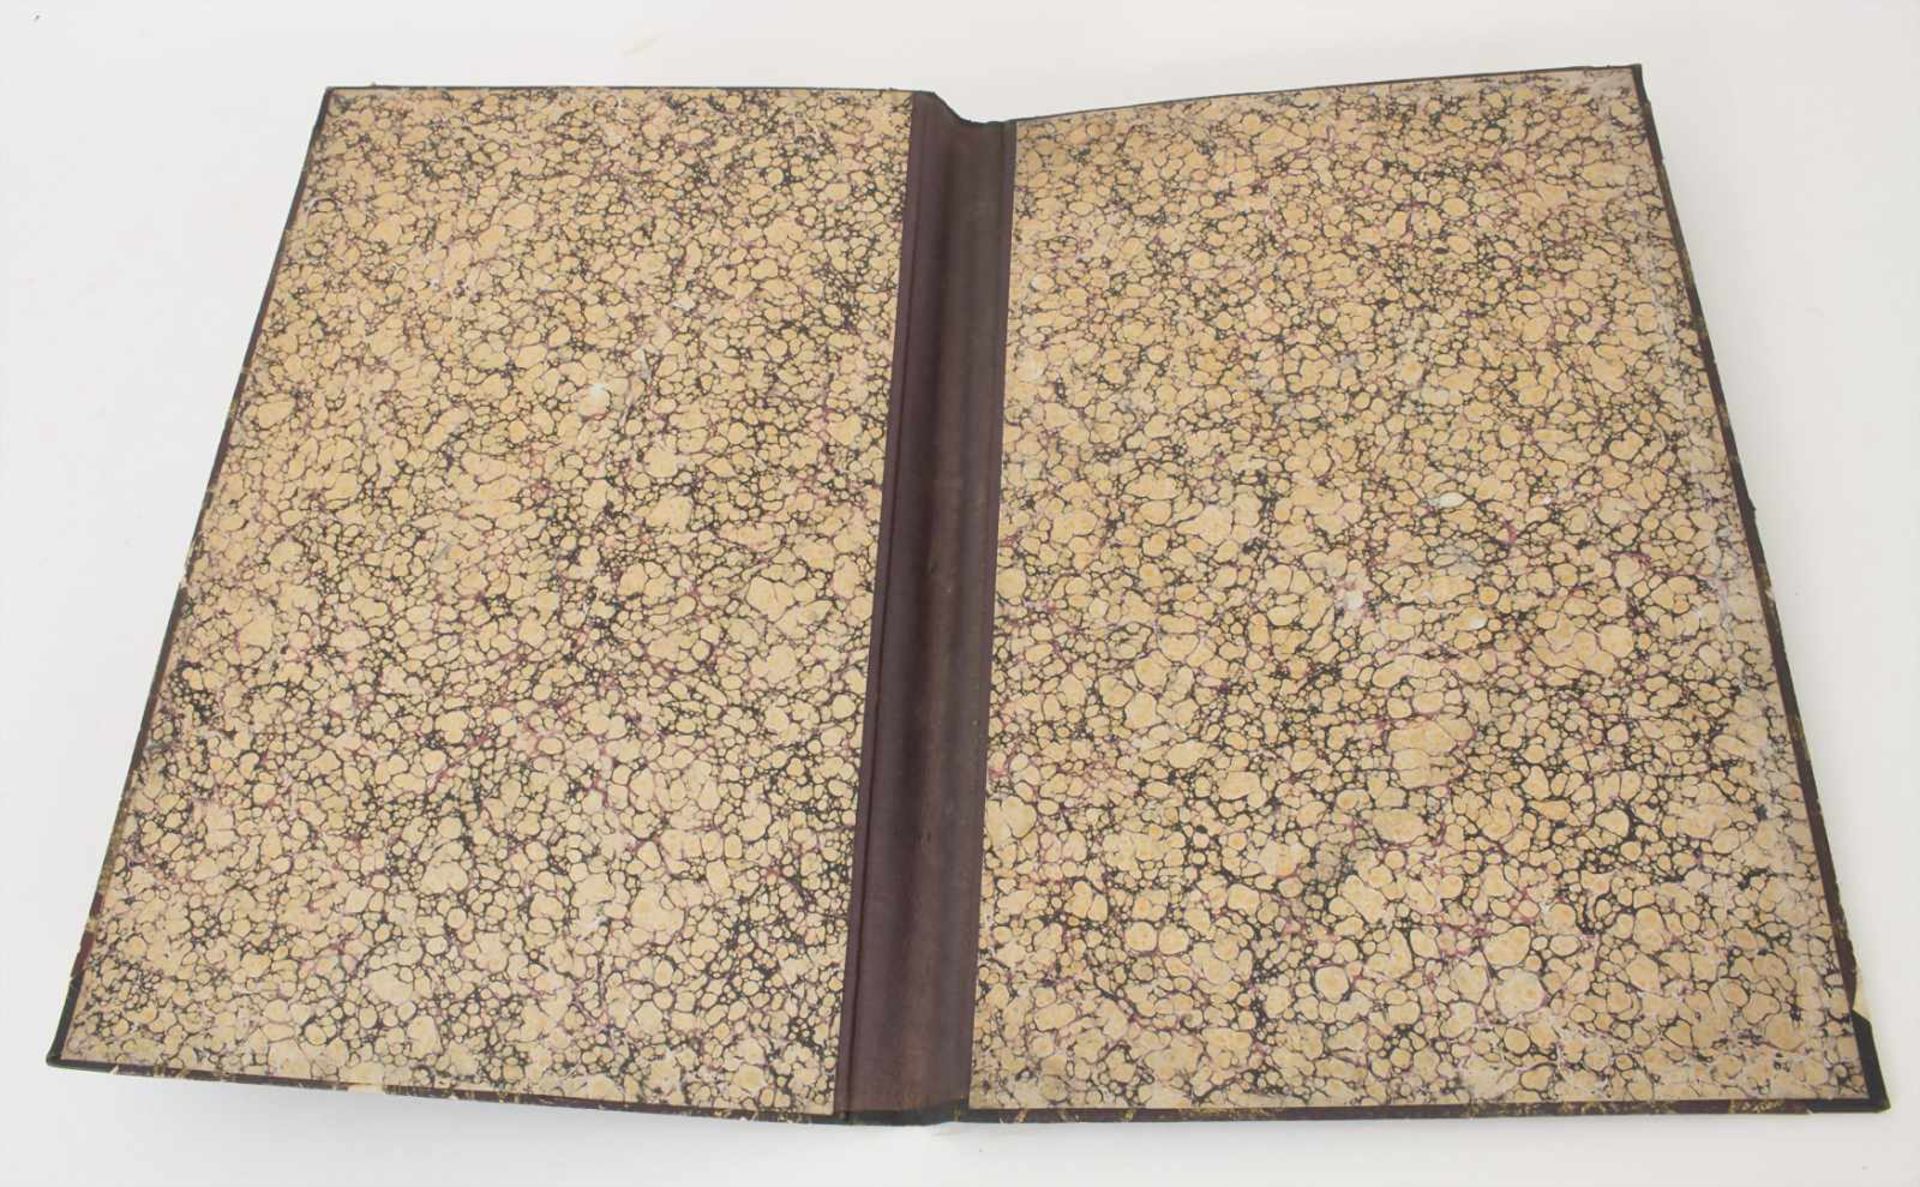 Dokumentenmappe / Document folder, Großherzogtum Hessen, um 1900Material: Dokumentenmappe, geprägter - Bild 3 aus 3